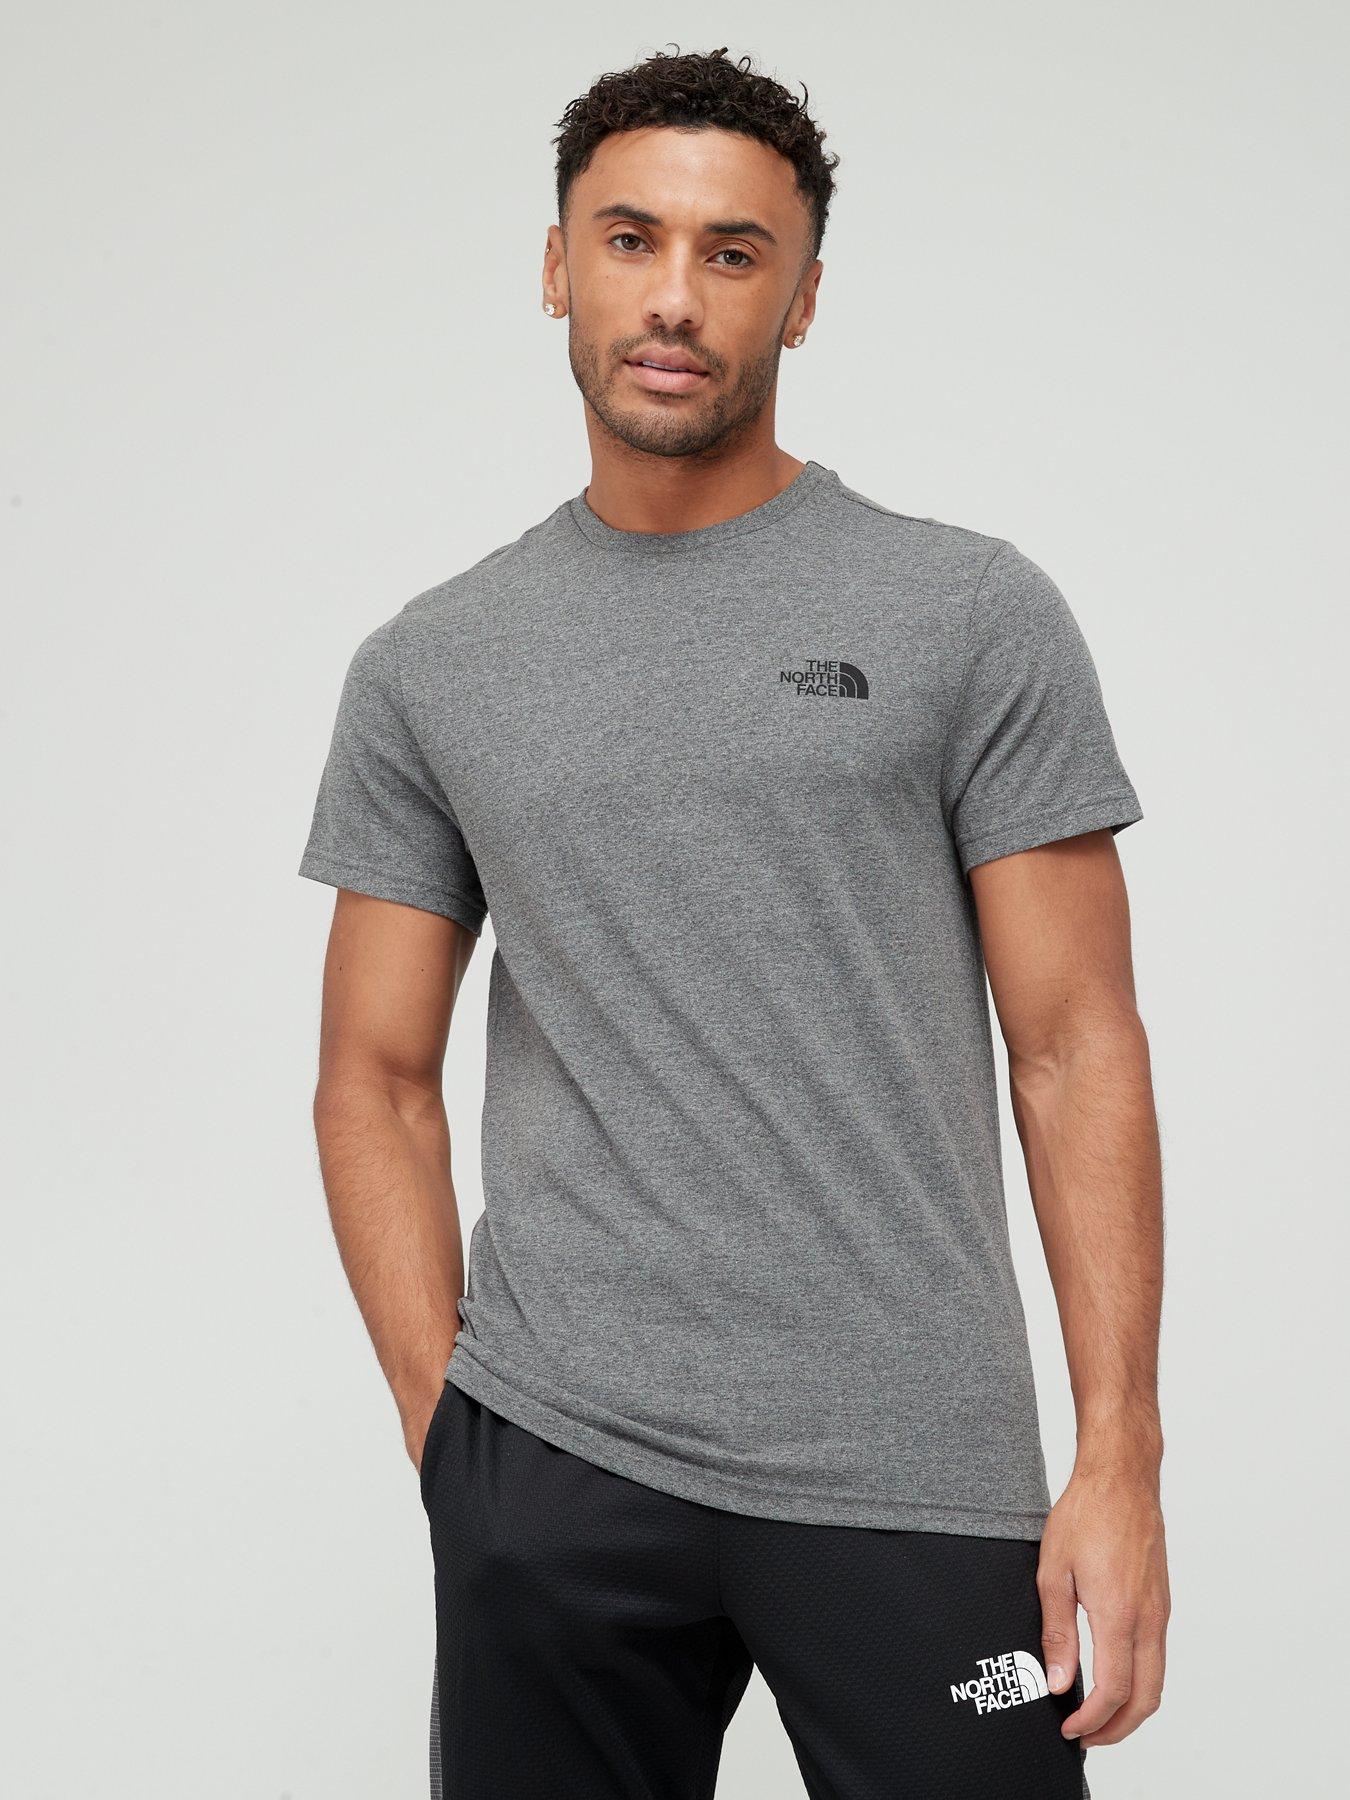 Mens Sports T Shirts | Mens Sports T Shirts at Very.co.uk